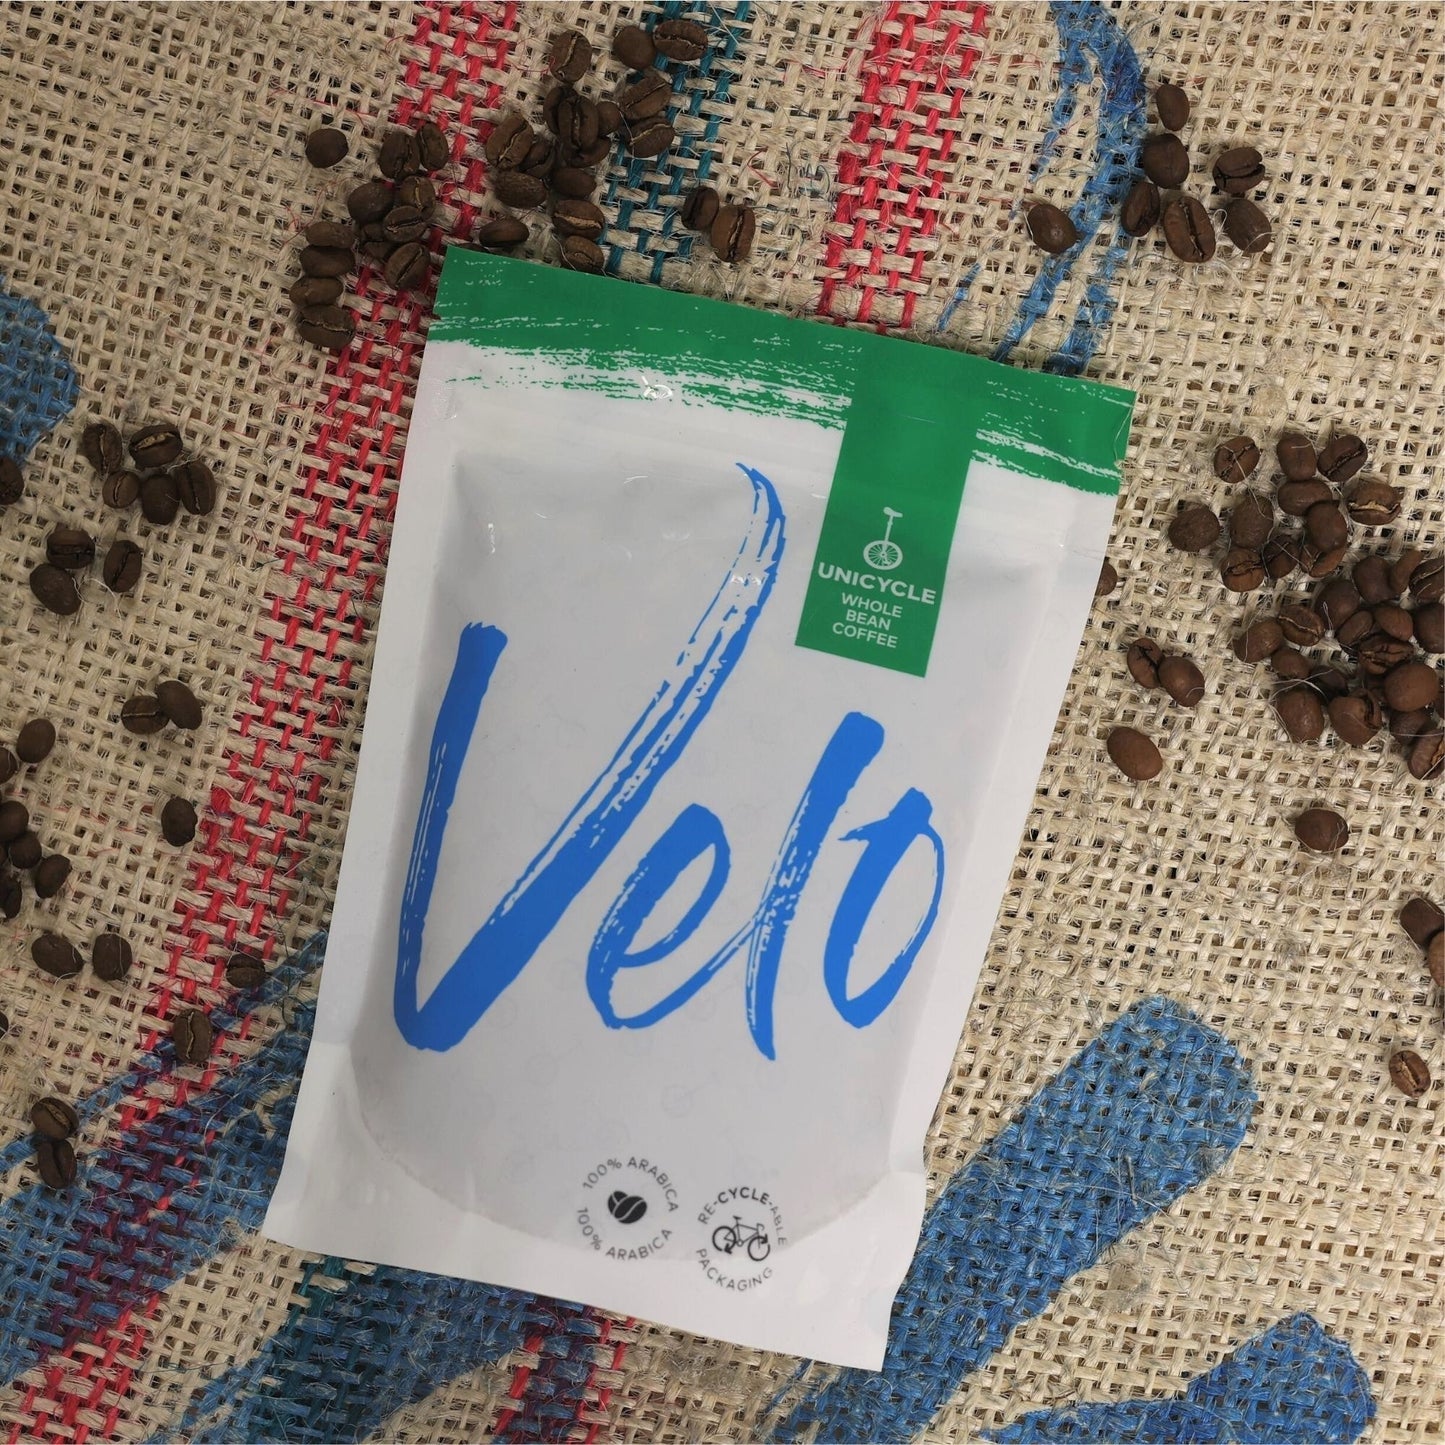 Peralta Estate 200g Coffee Bag Nicaragua - Velo Coffee Roasters